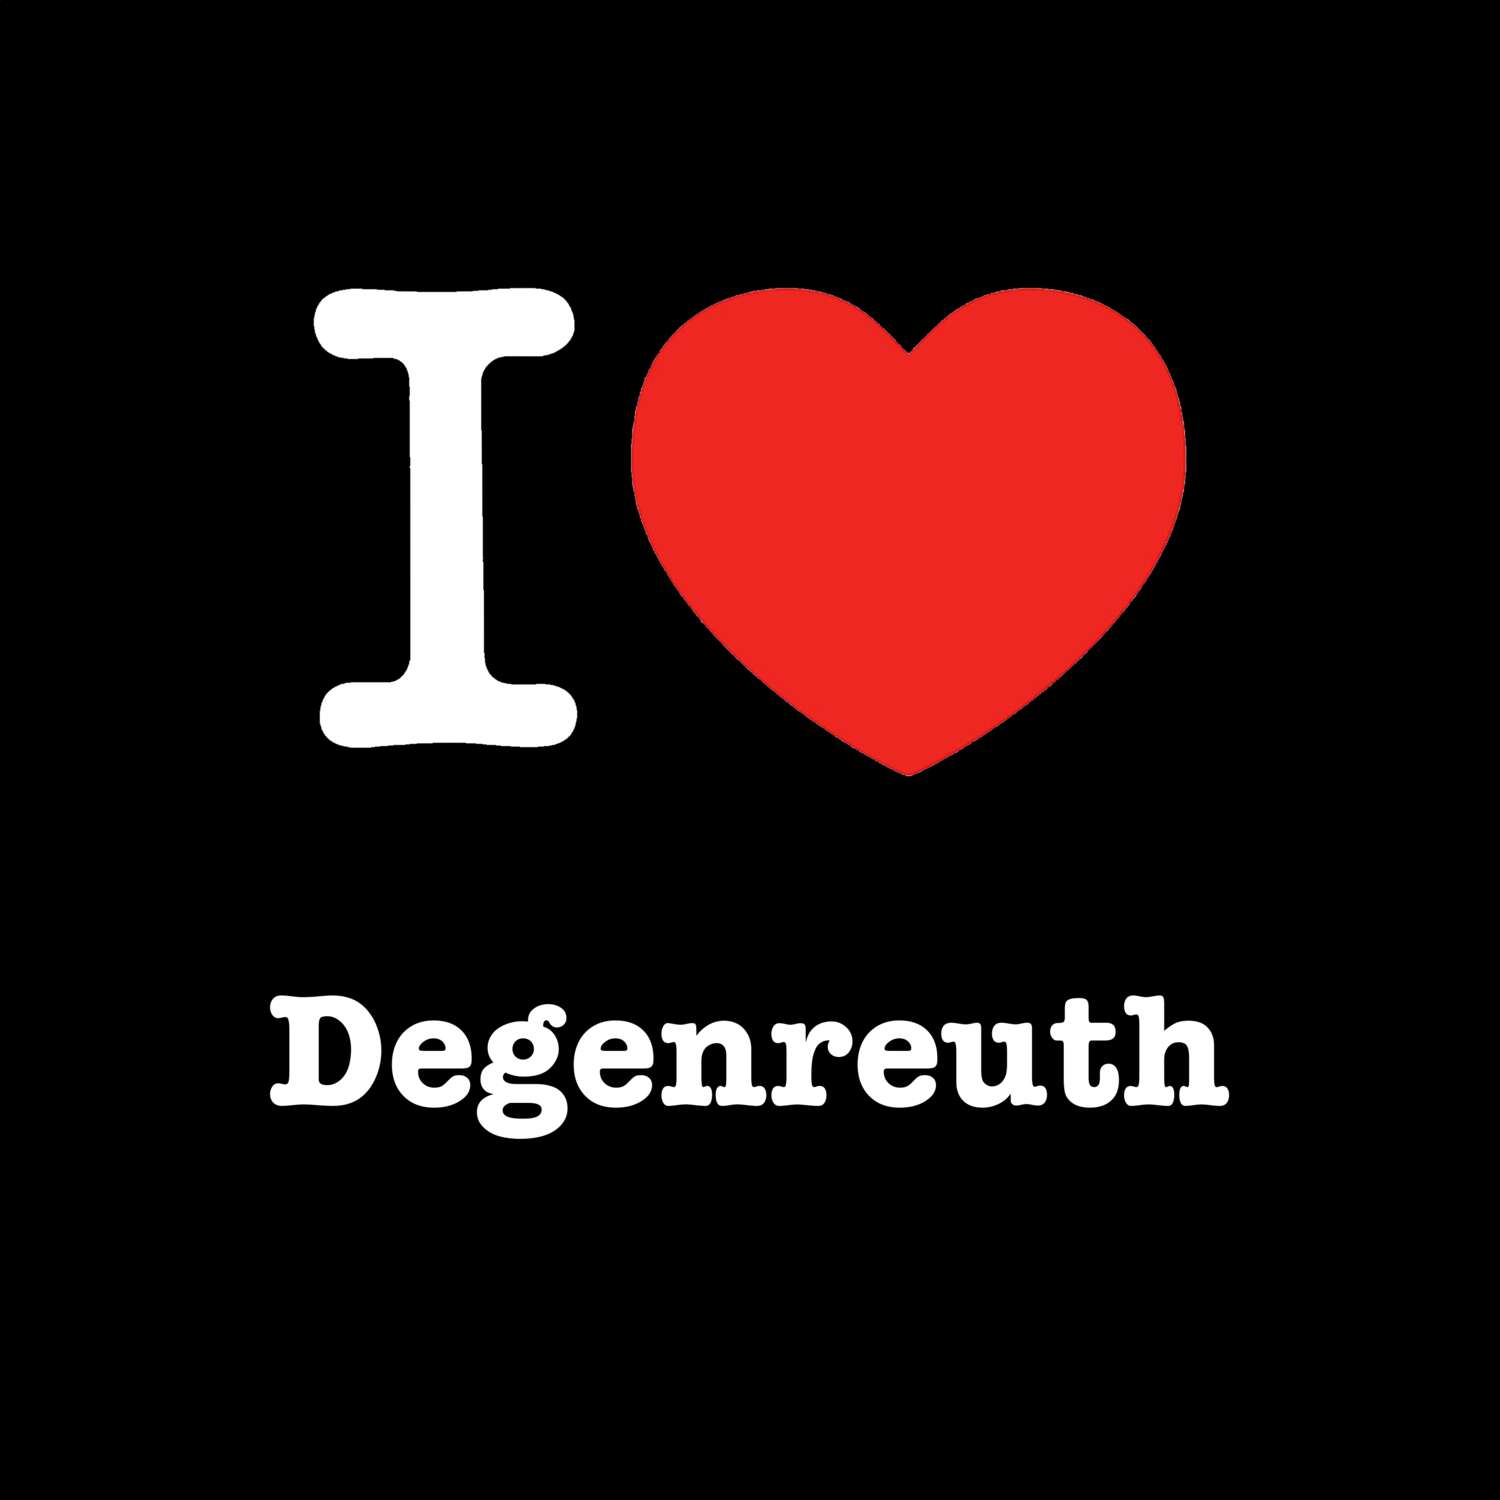 Degenreuth T-Shirt »I love«